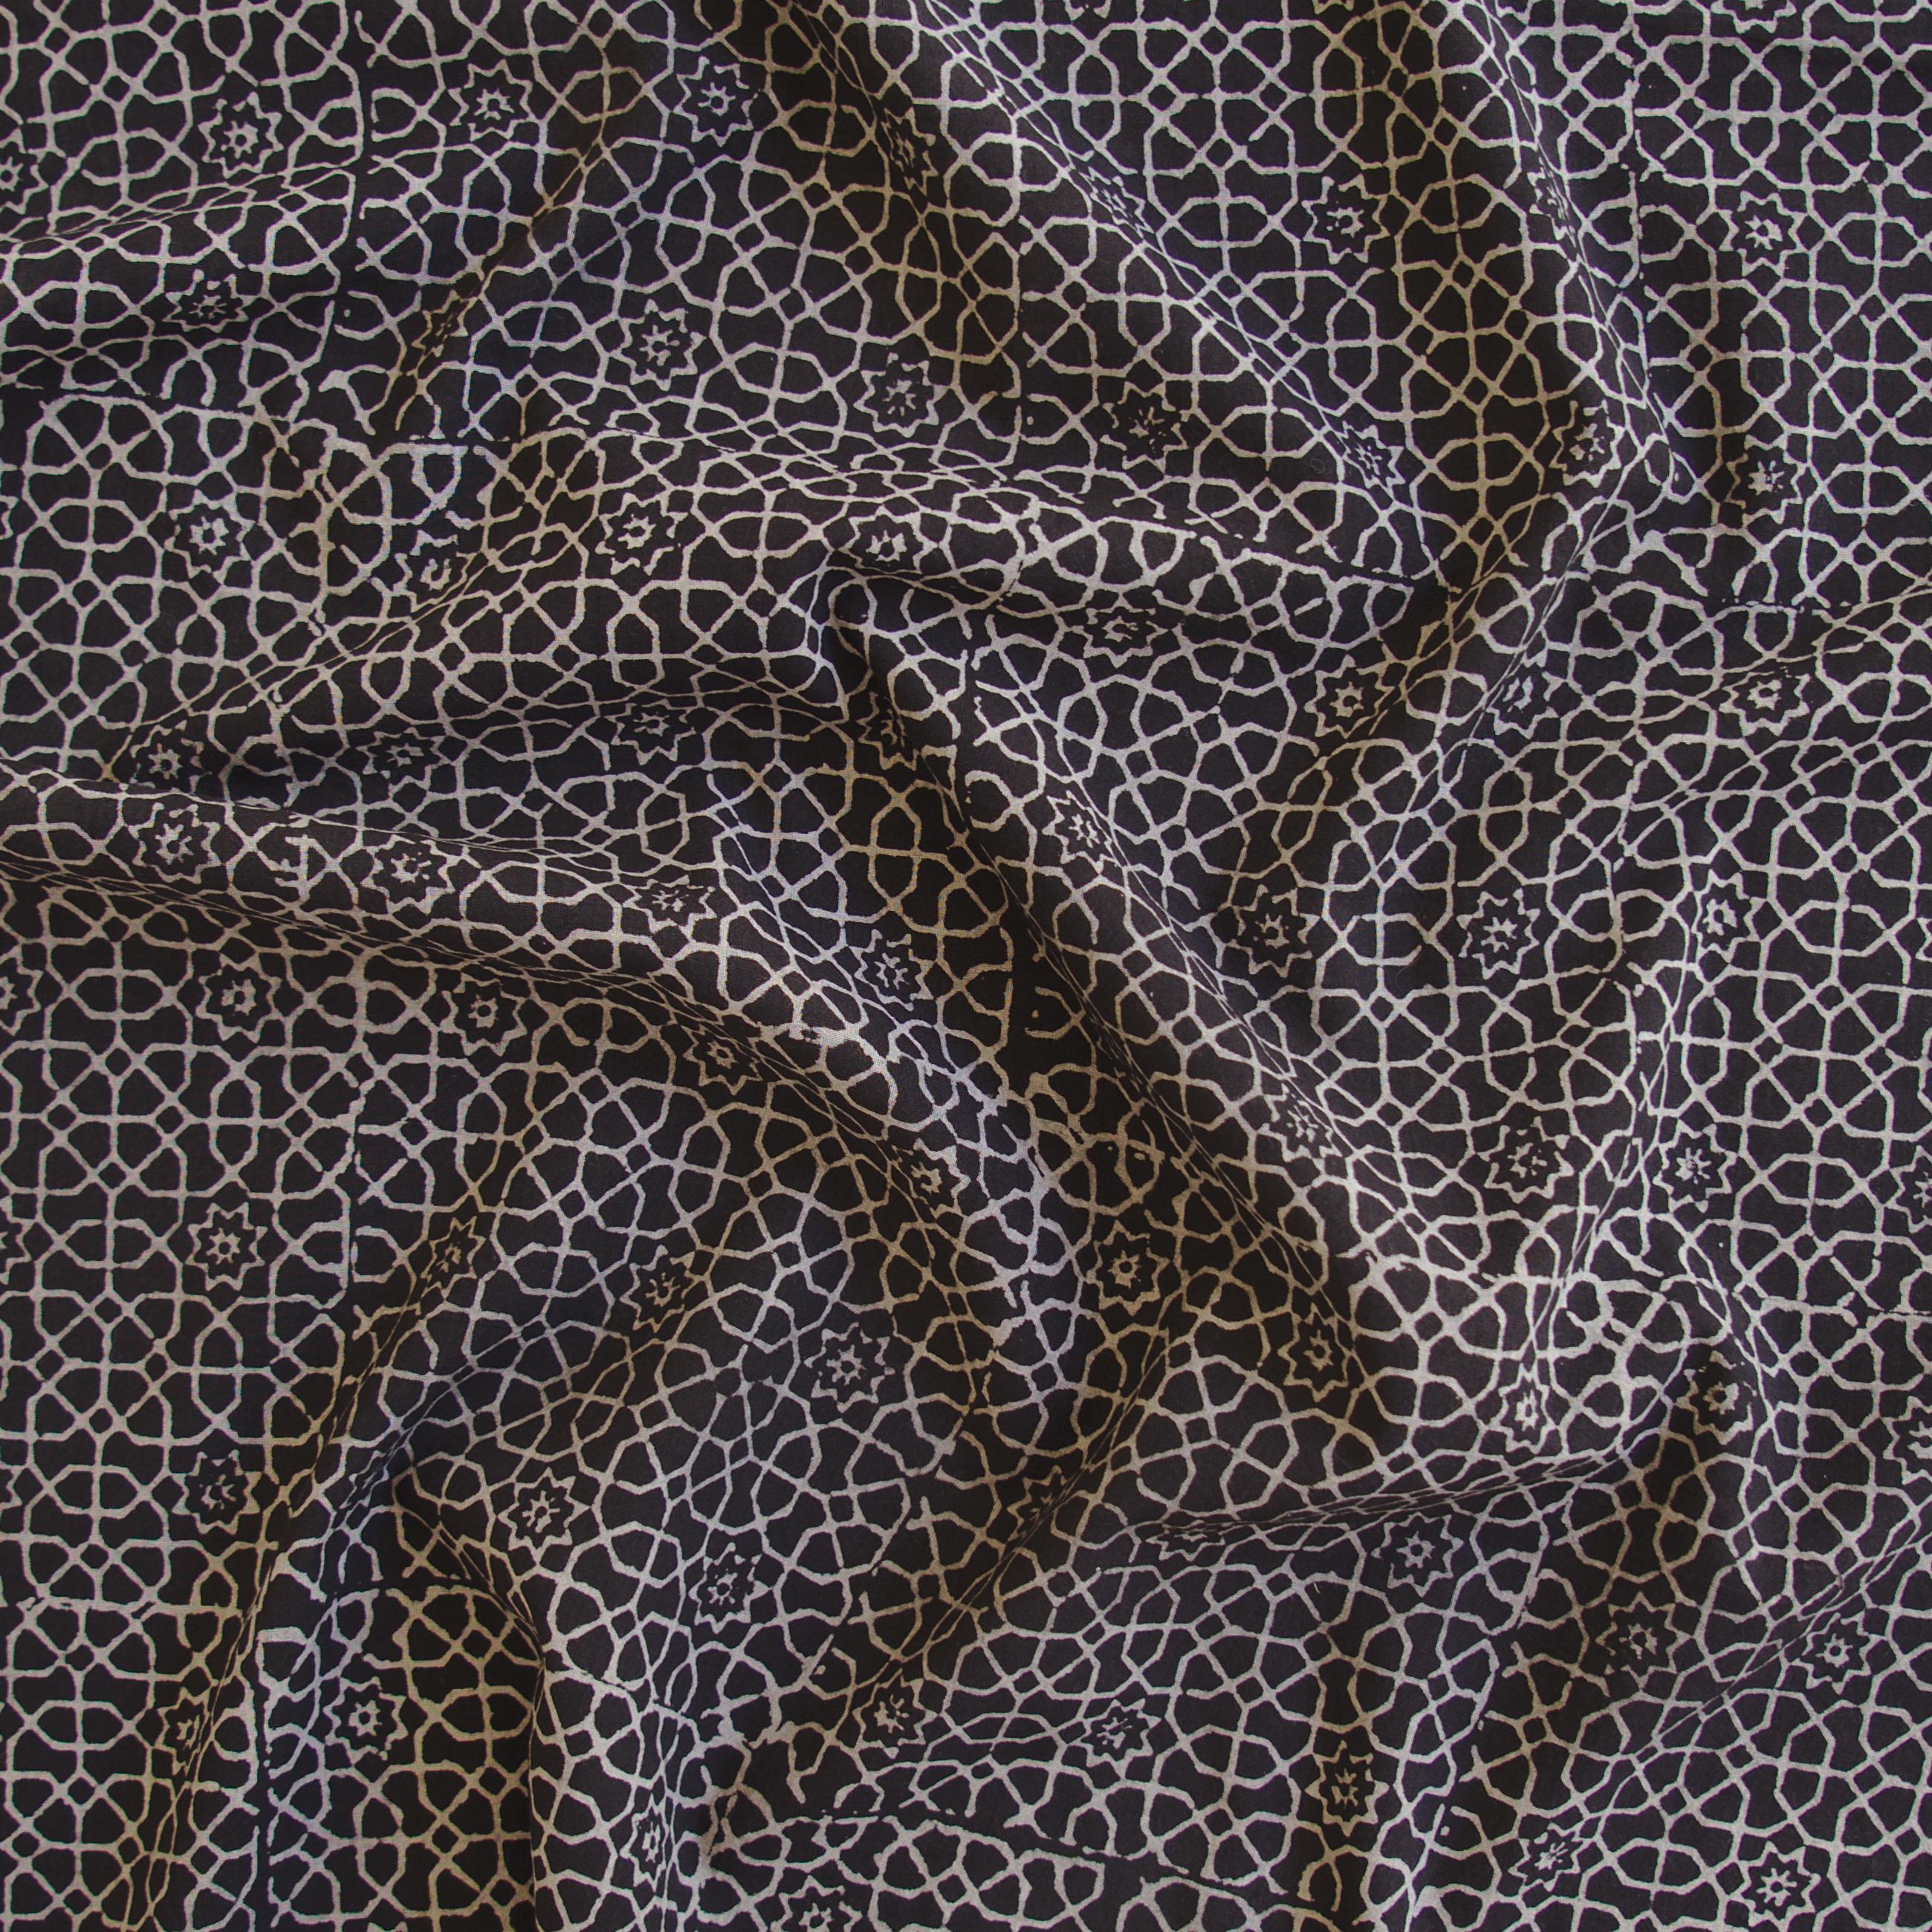 Block Printed Fabric, 100% Cotton, Ajrak Design: Iron Black Base, White Octagon. Contrast